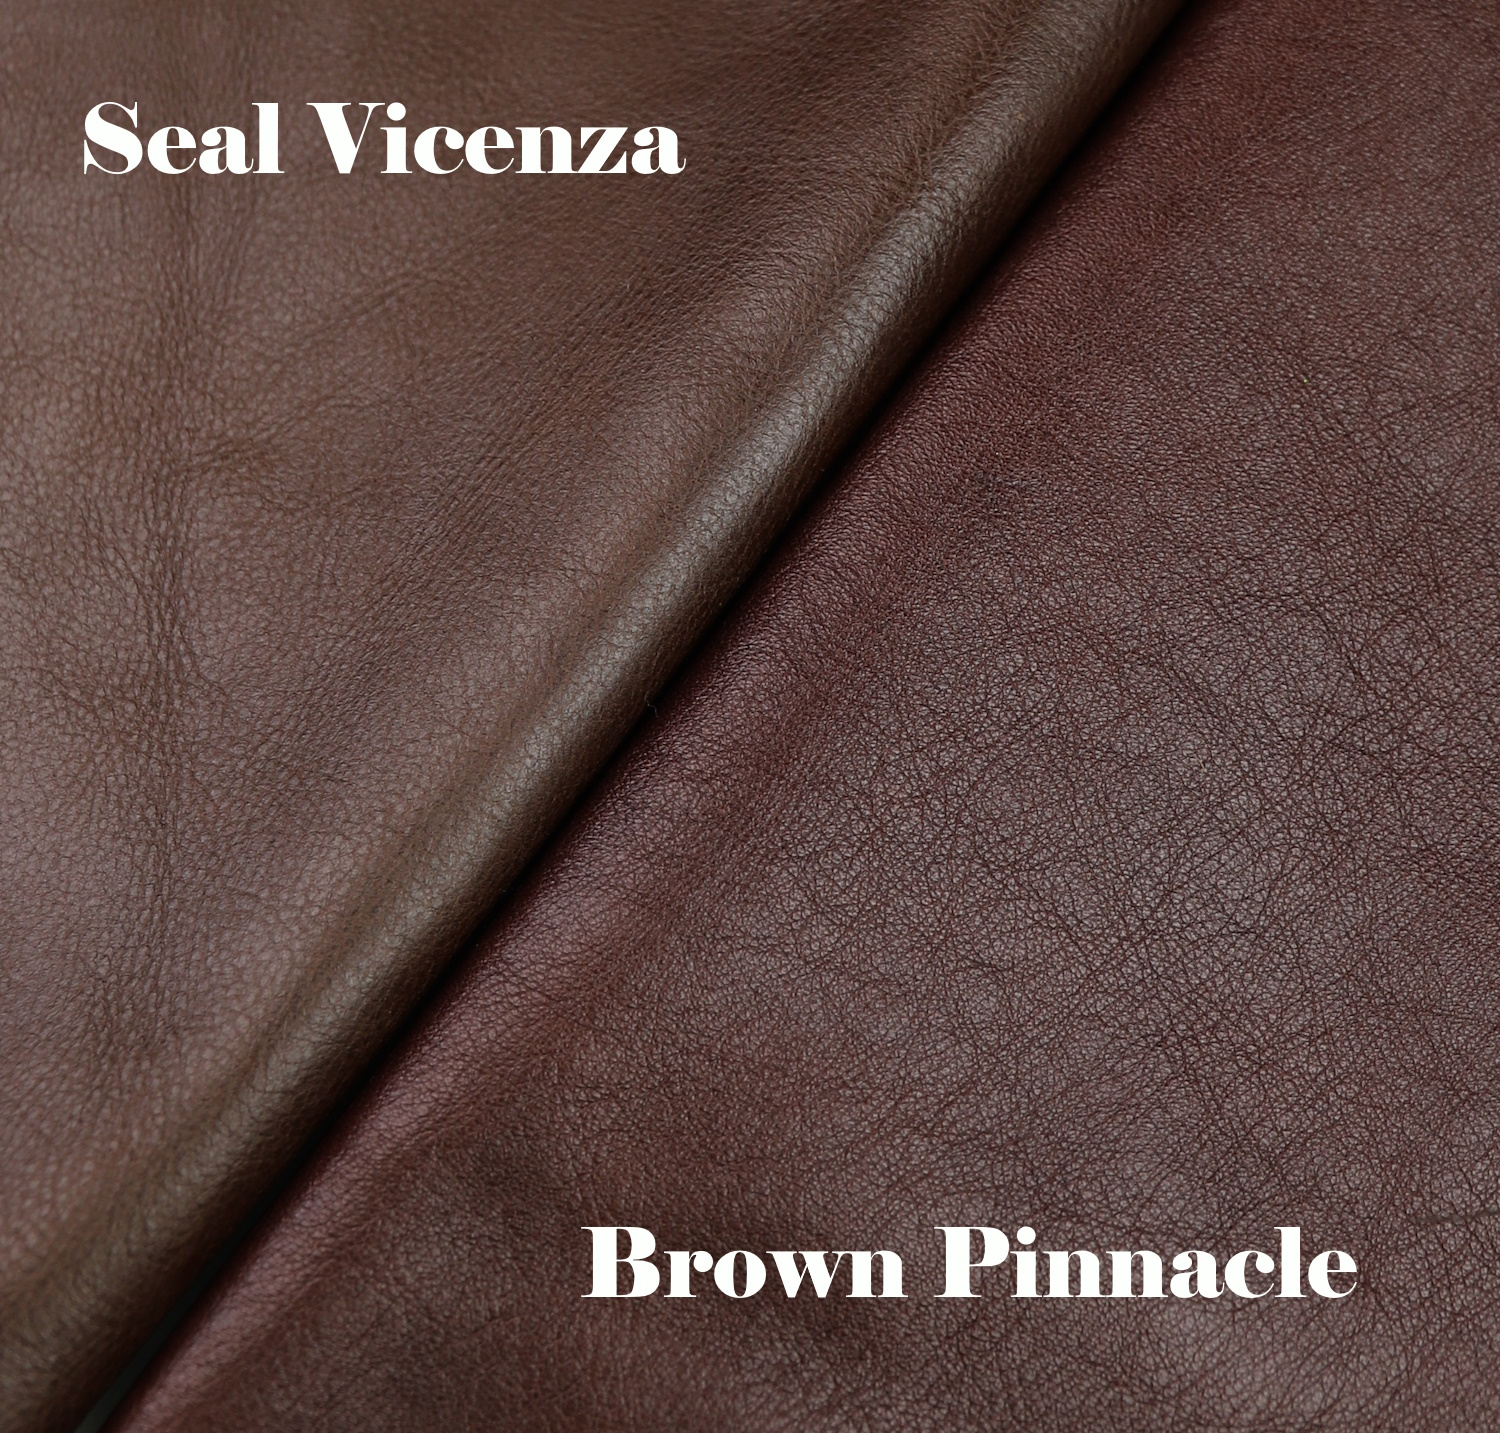 Vicenza Brown Pinnacle color comparison 2.jpg